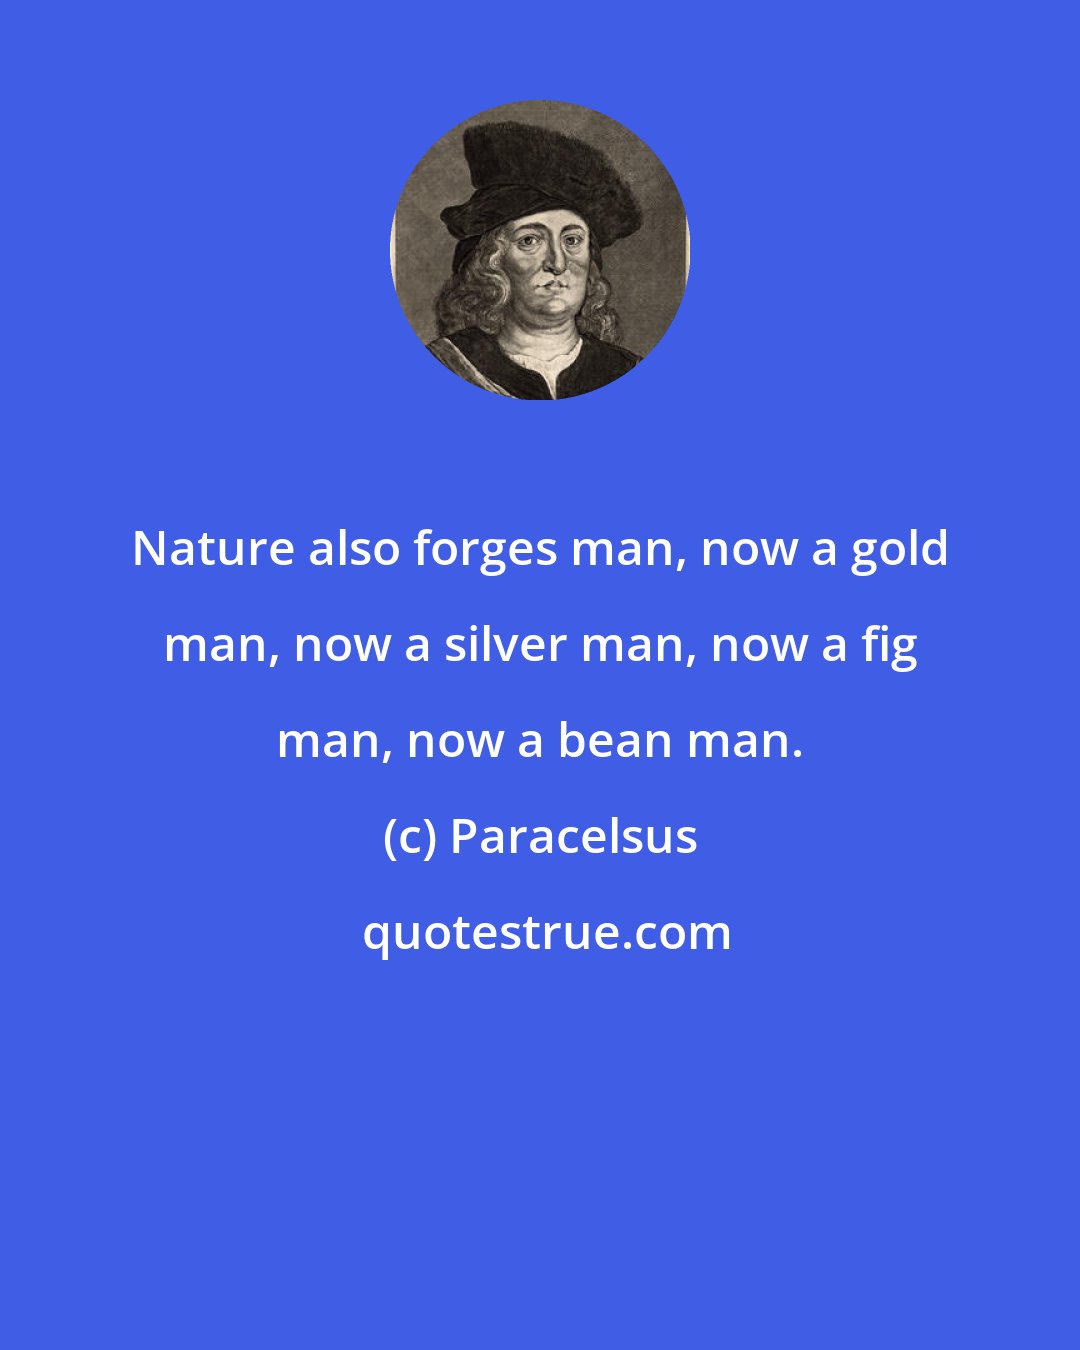 Paracelsus: Nature also forges man, now a gold man, now a silver man, now a fig man, now a bean man.